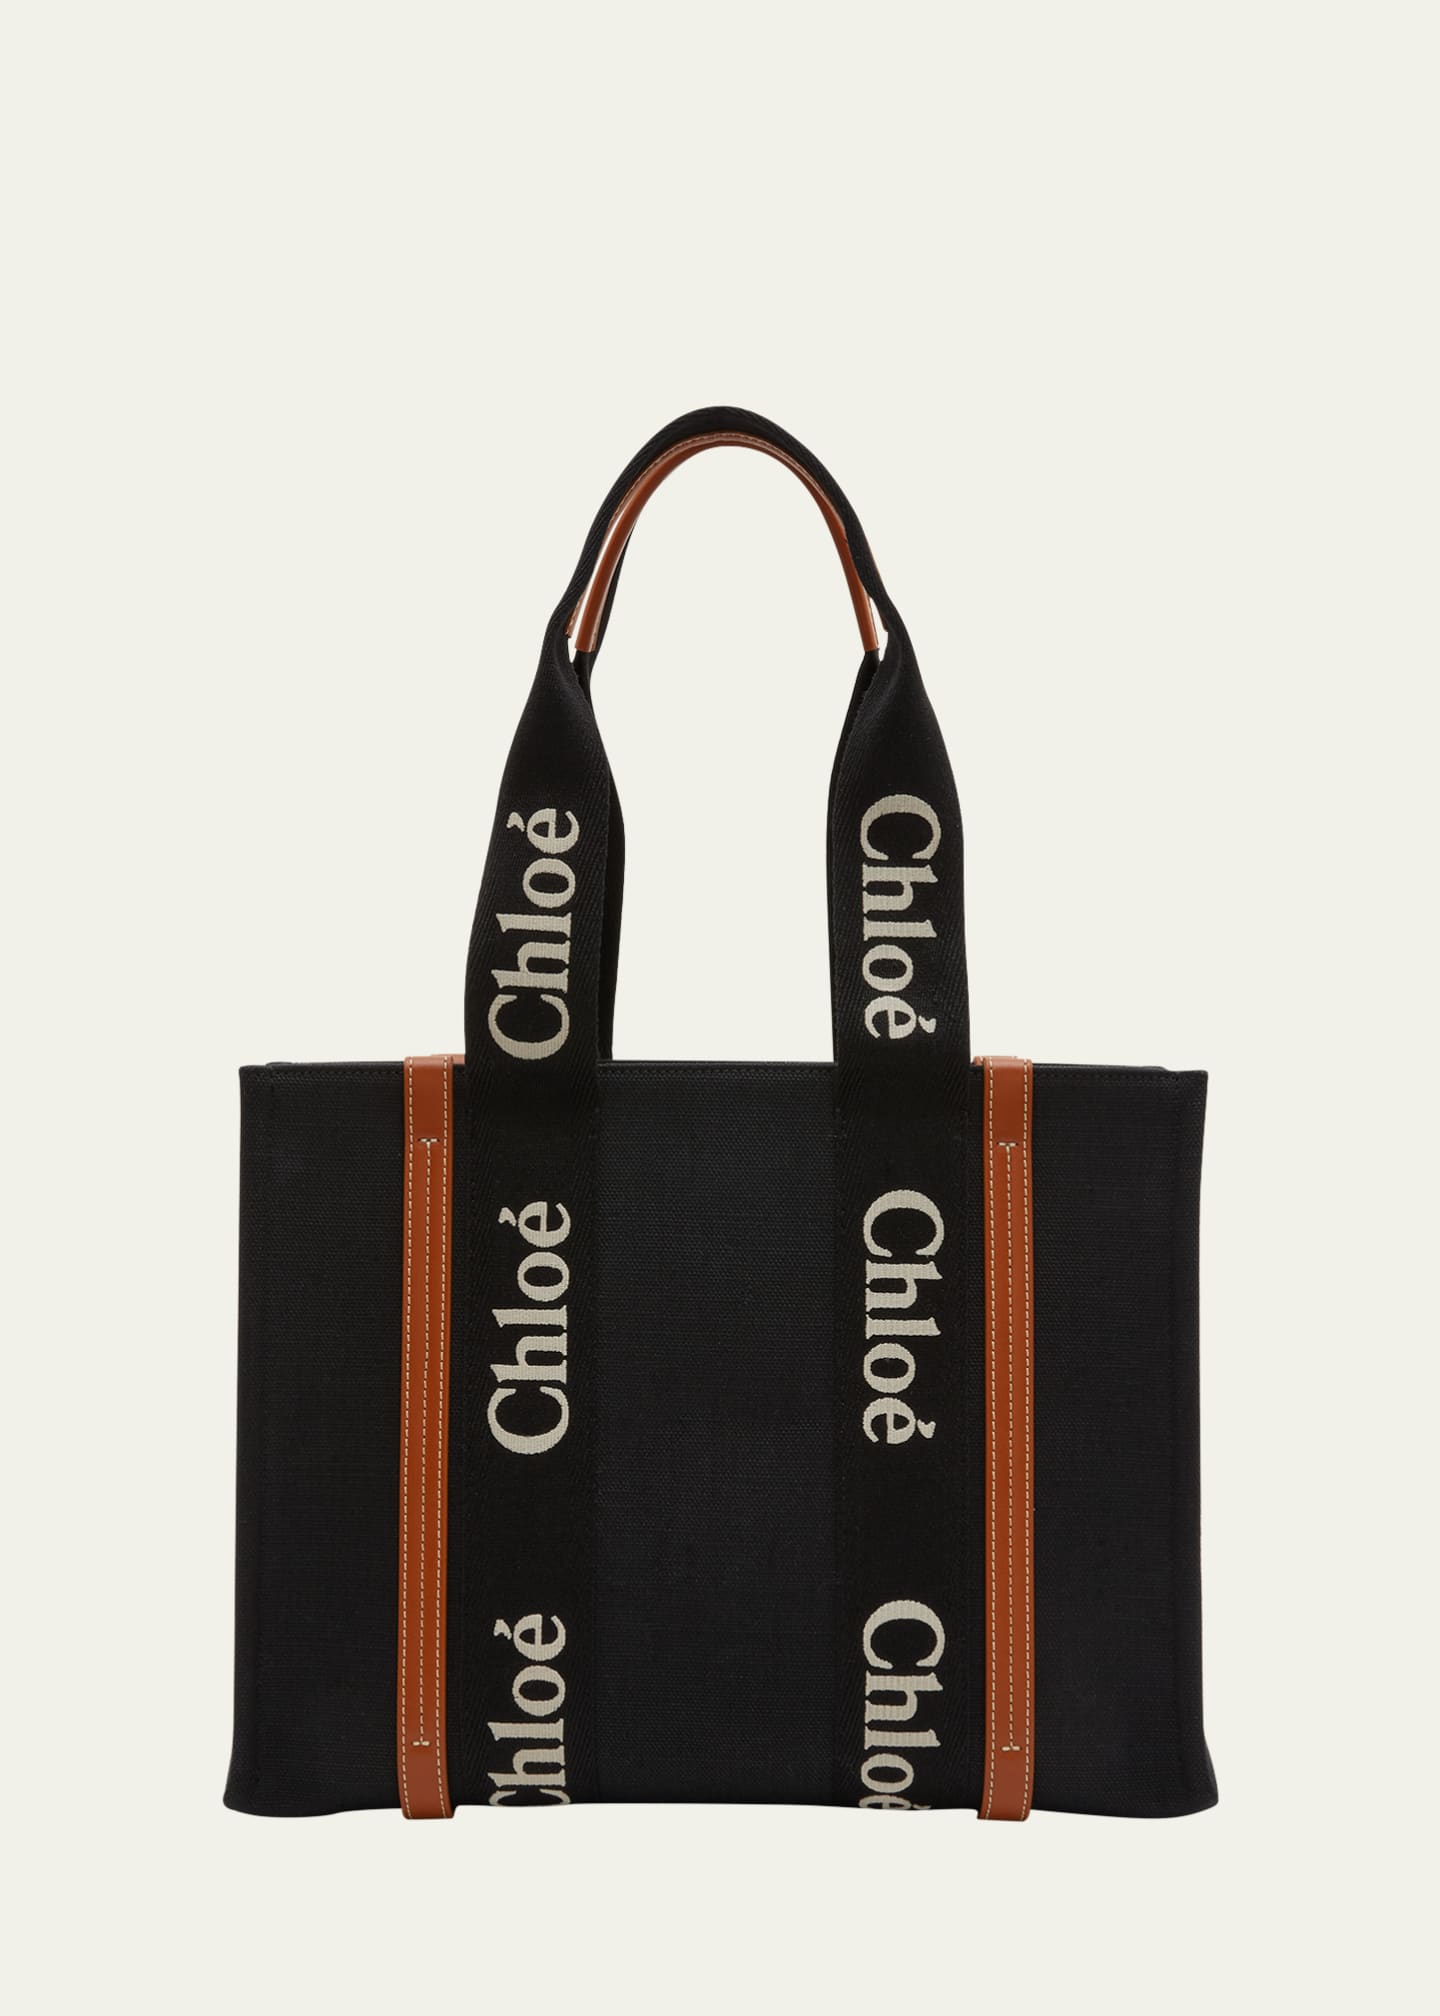 Chloe, Bags, Chloe Brand Purse